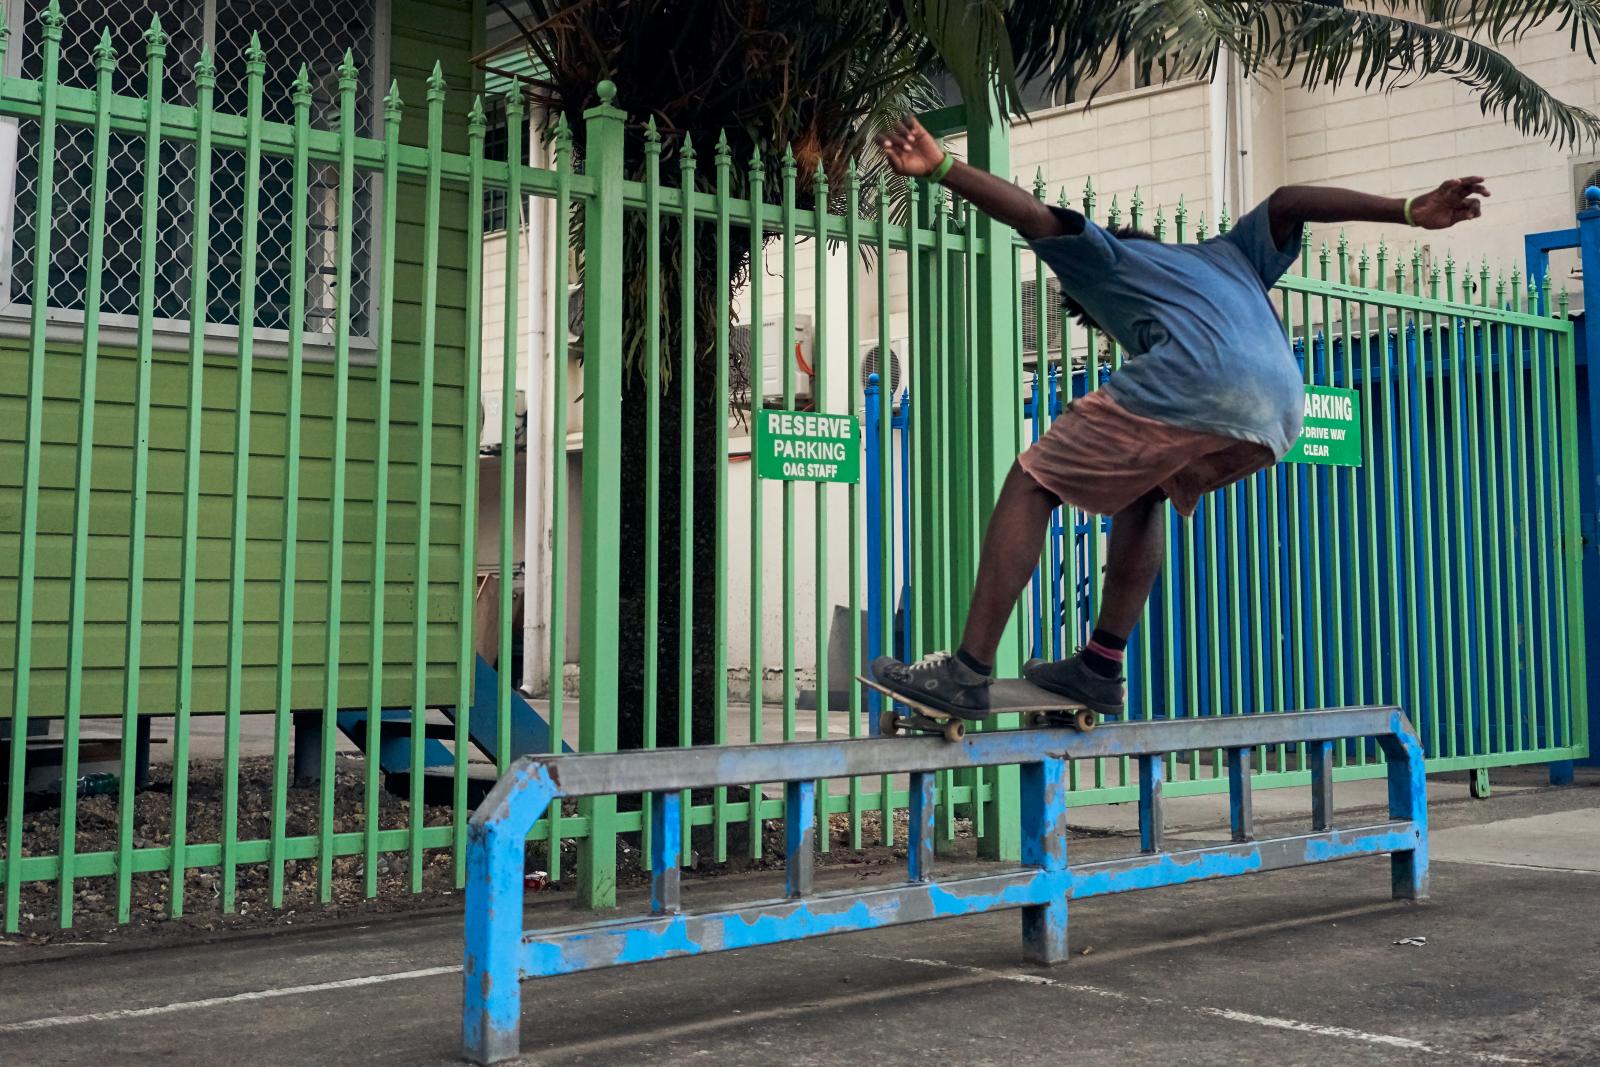 Re: The Solomon Islands Skateboarding Scene